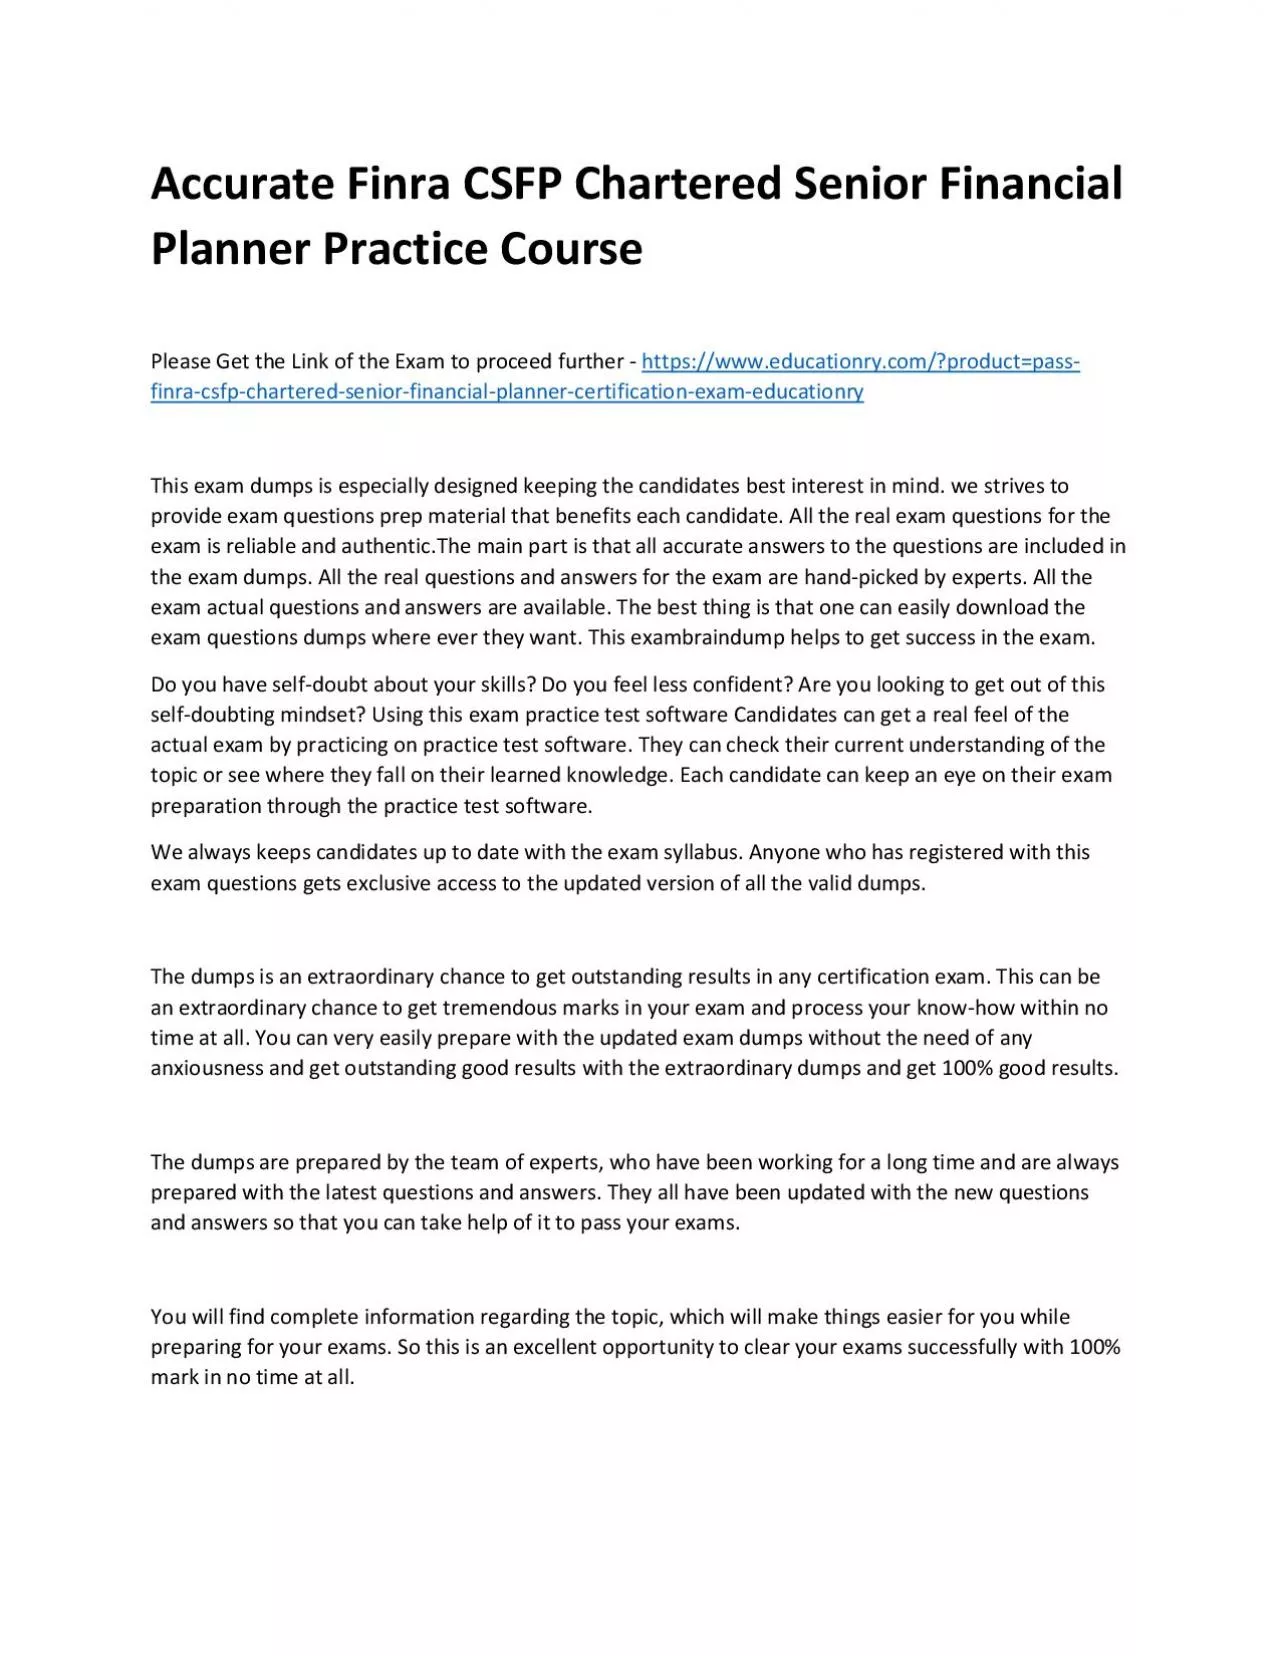 Finra CSFP Chartered Senior Financial Planner